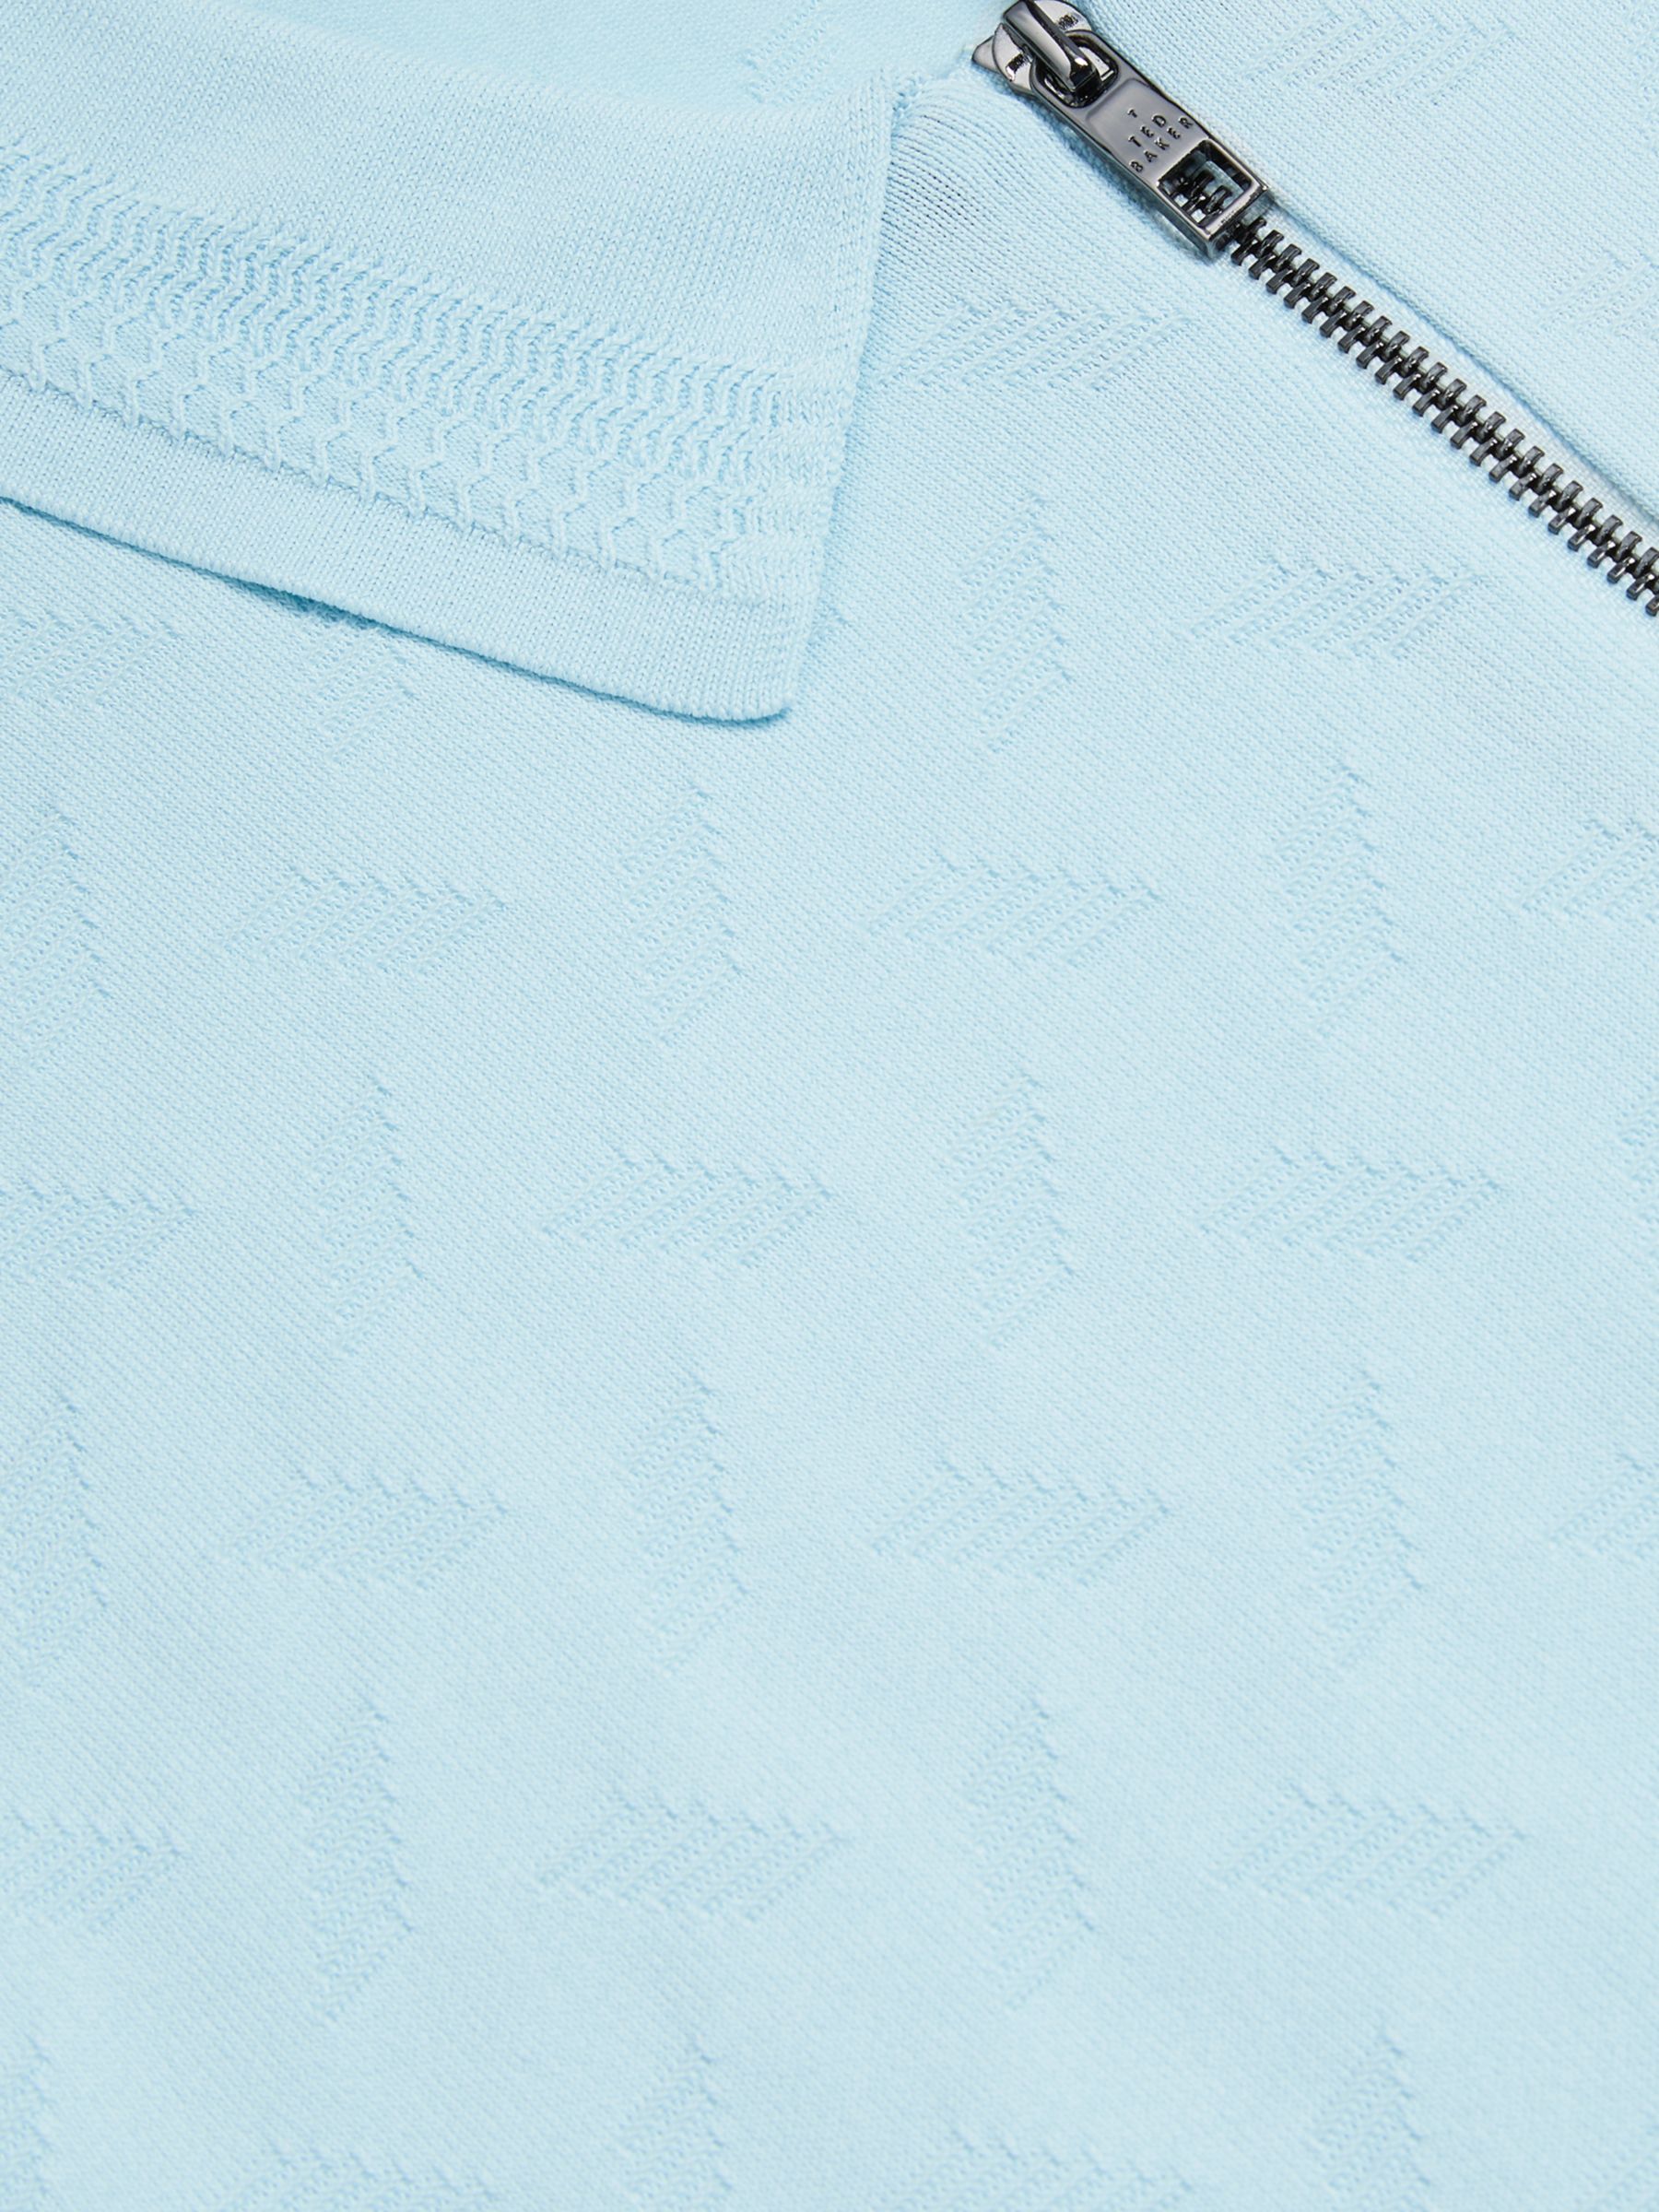 Ted Baker Palton Textured Zipped Polo Shirt, Light Blue, M